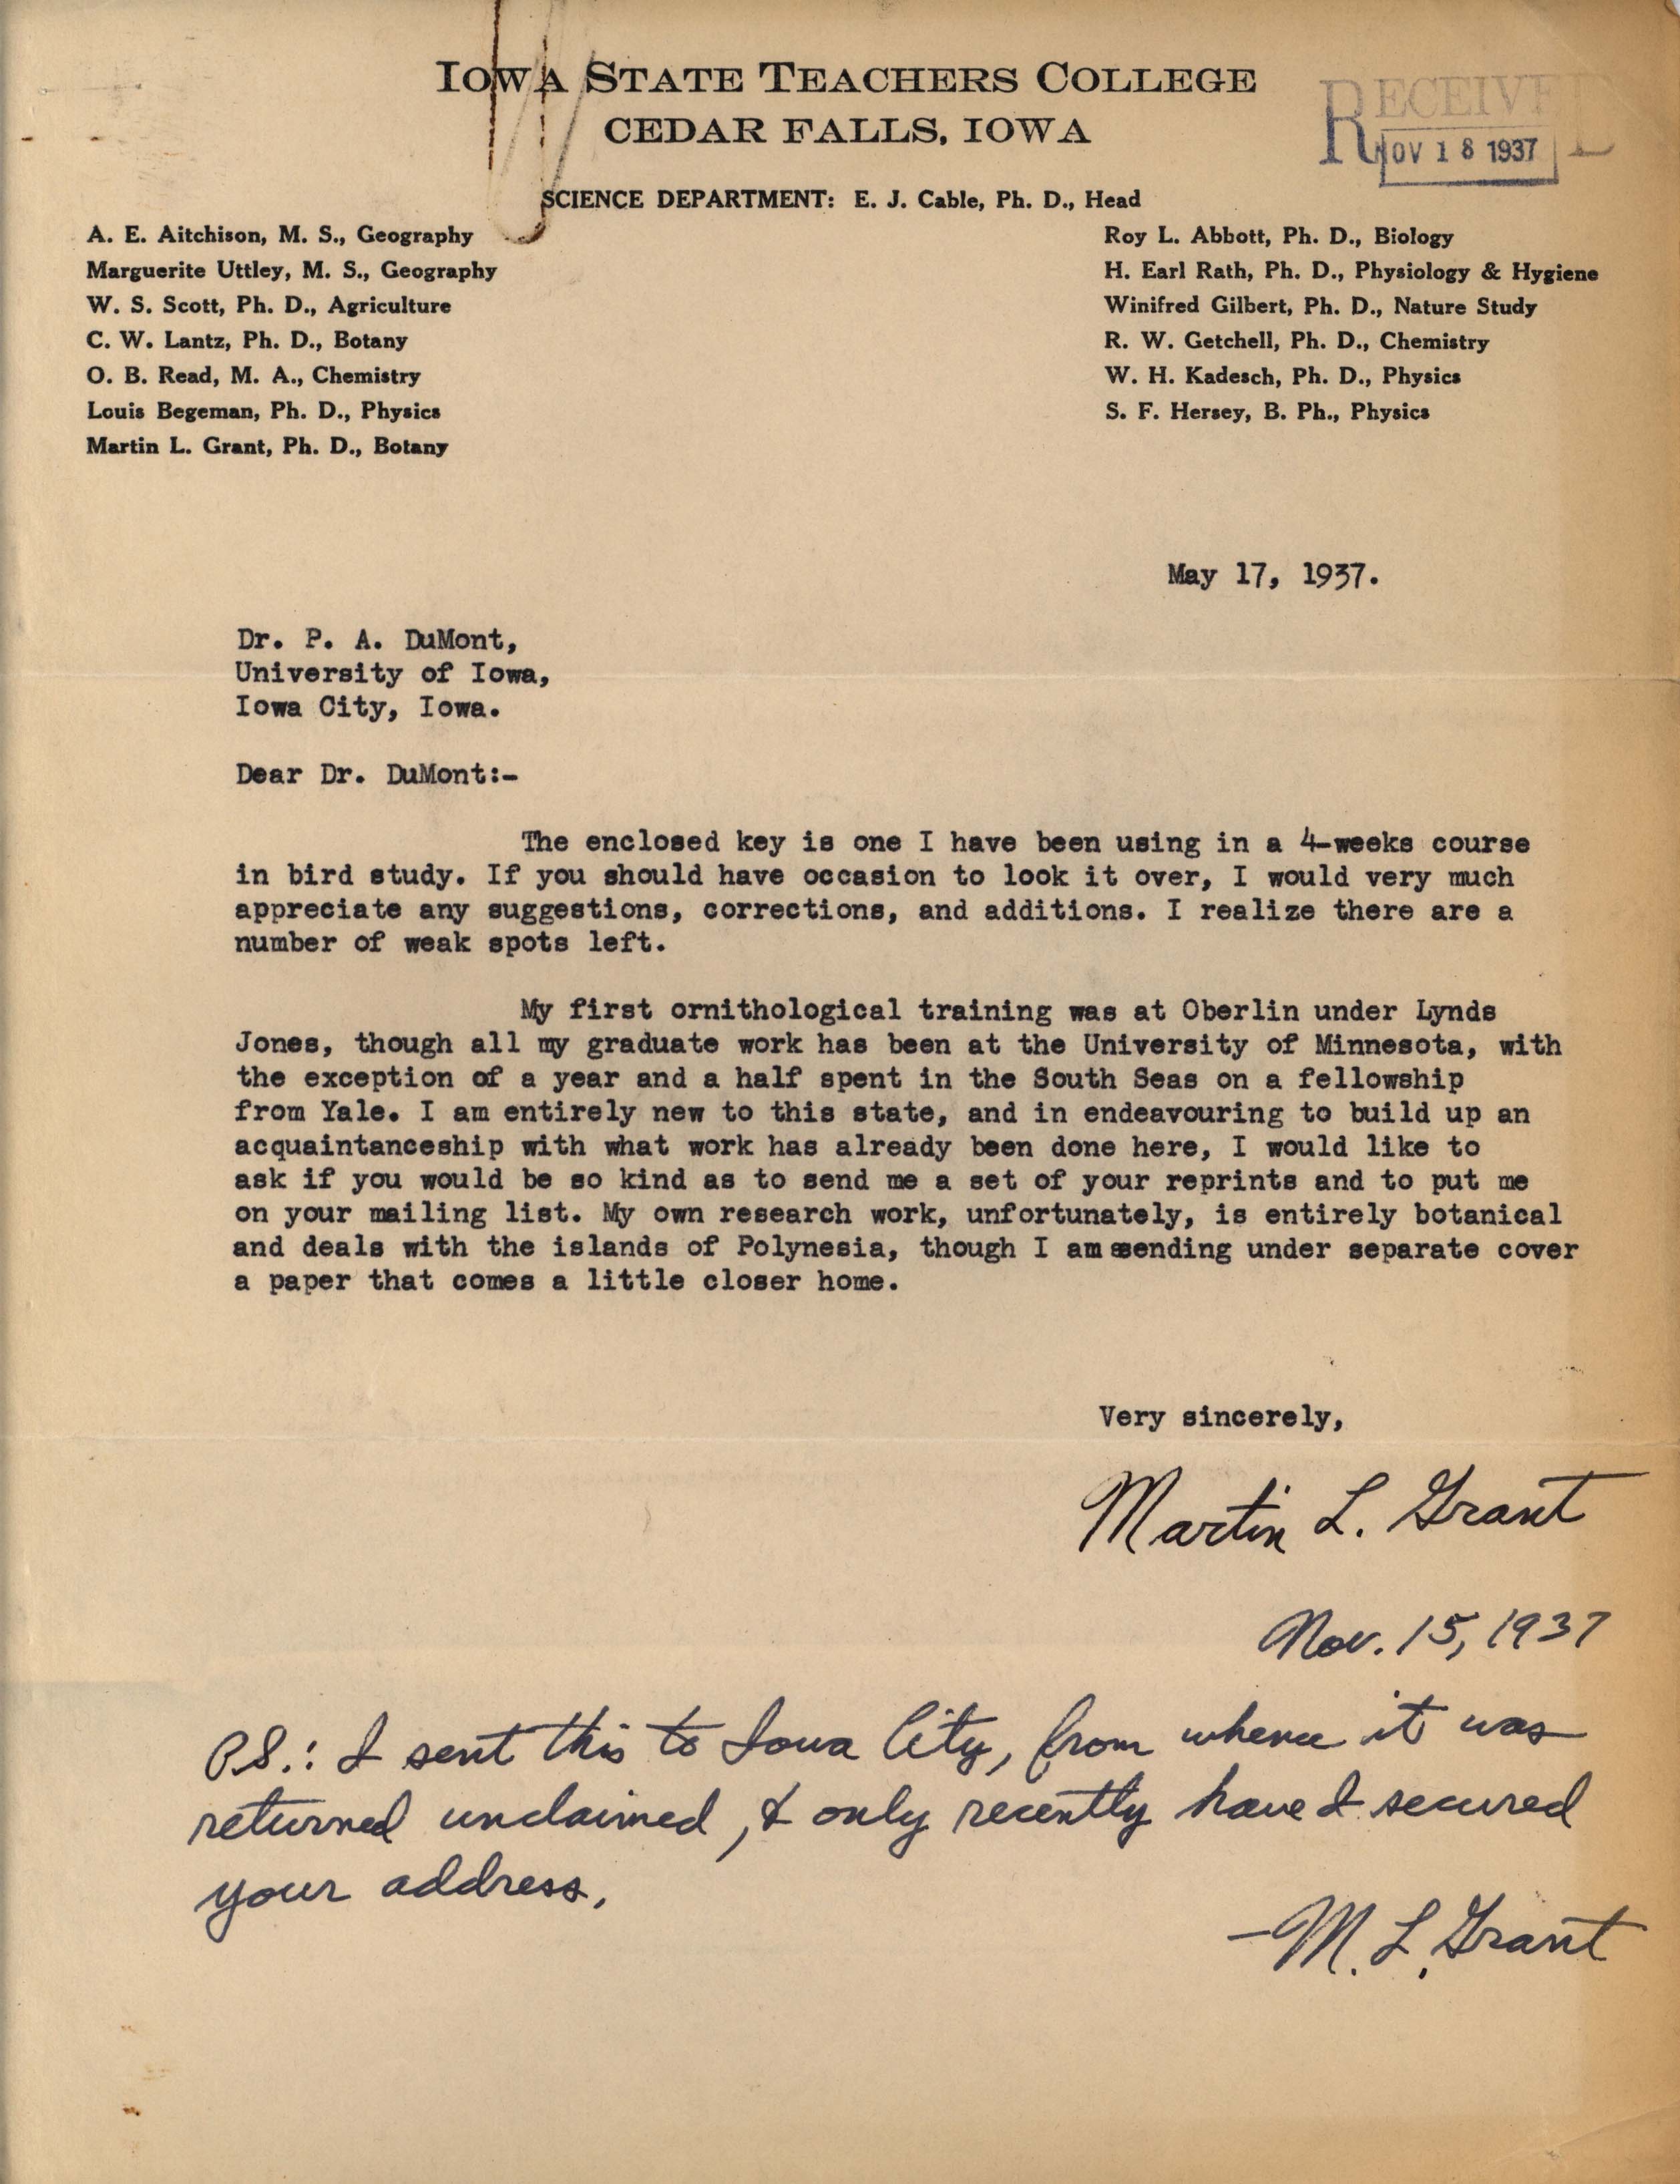 Martin Grant letter to Philip DuMont regarding identification key, May 17, 1937